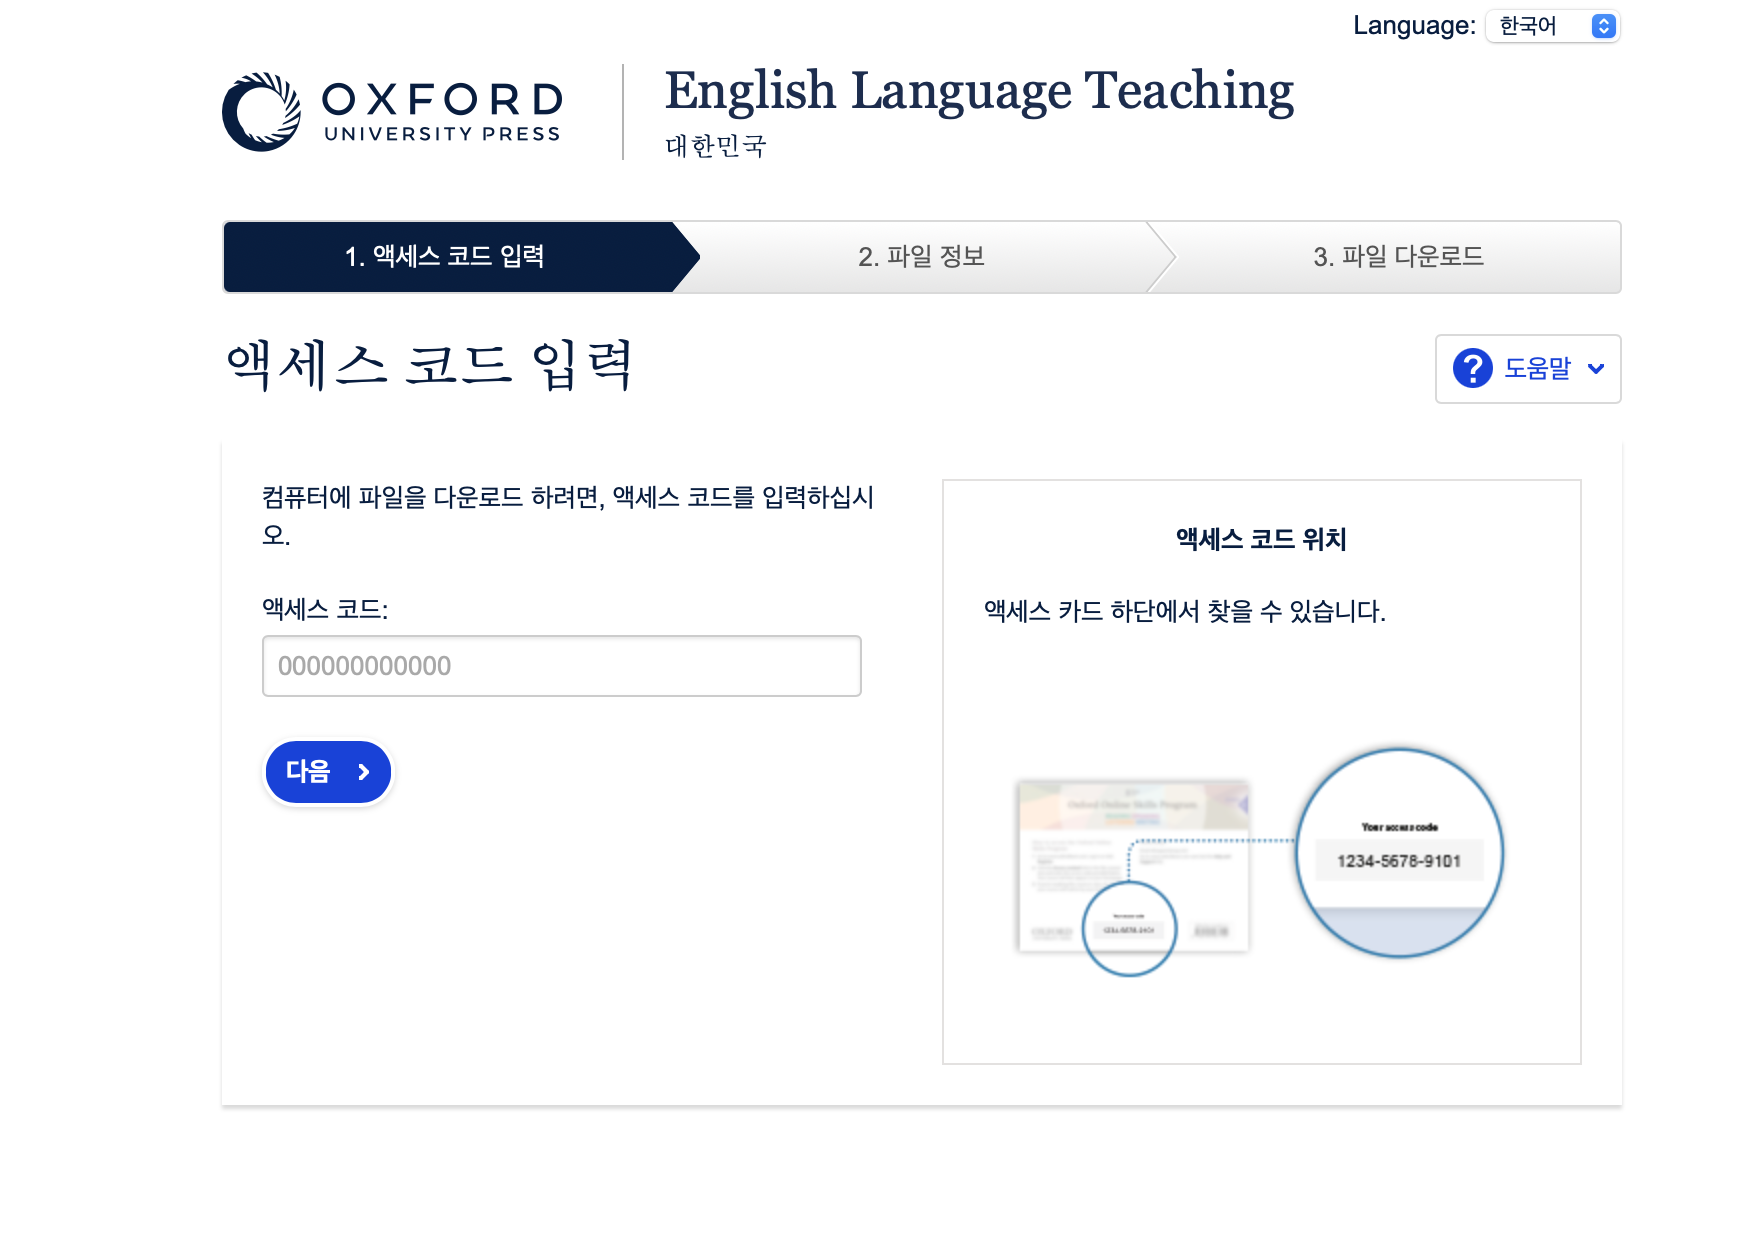 Access Code &#124; English Language Teaching &#124; Oxford University Press (www.oup.com/elt/download)